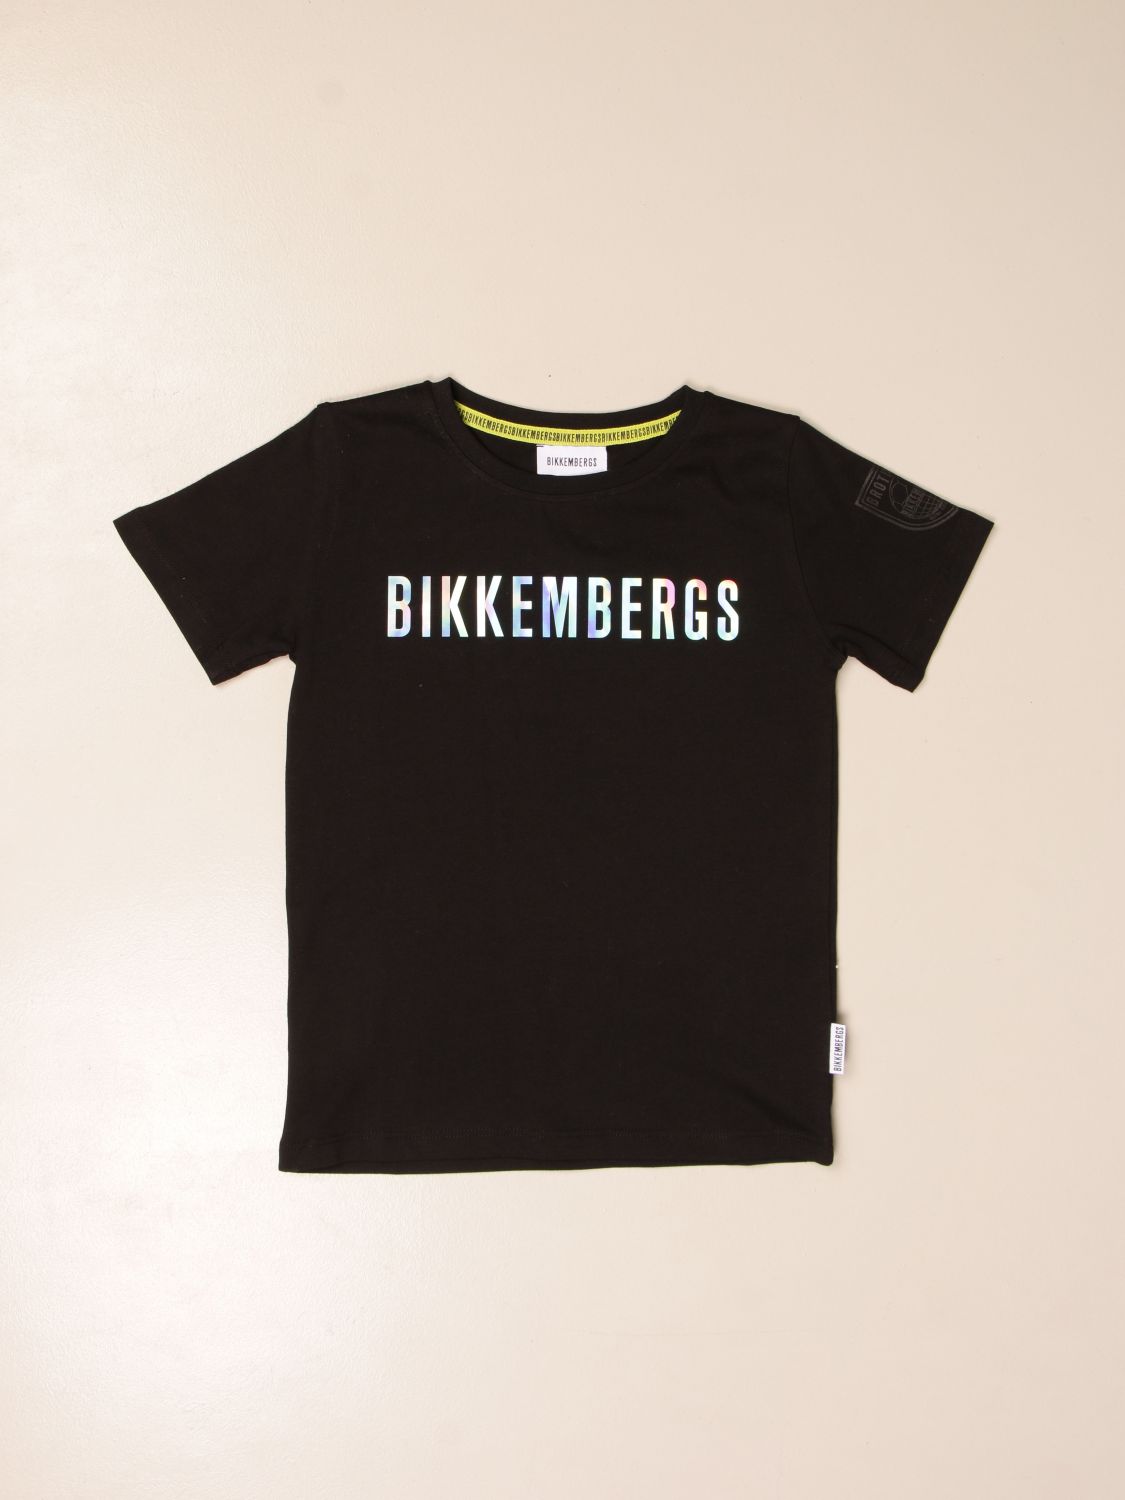 Bikkembergs T Shirt Hot Sale, 53% OFF | www.ingeniovirtual.com